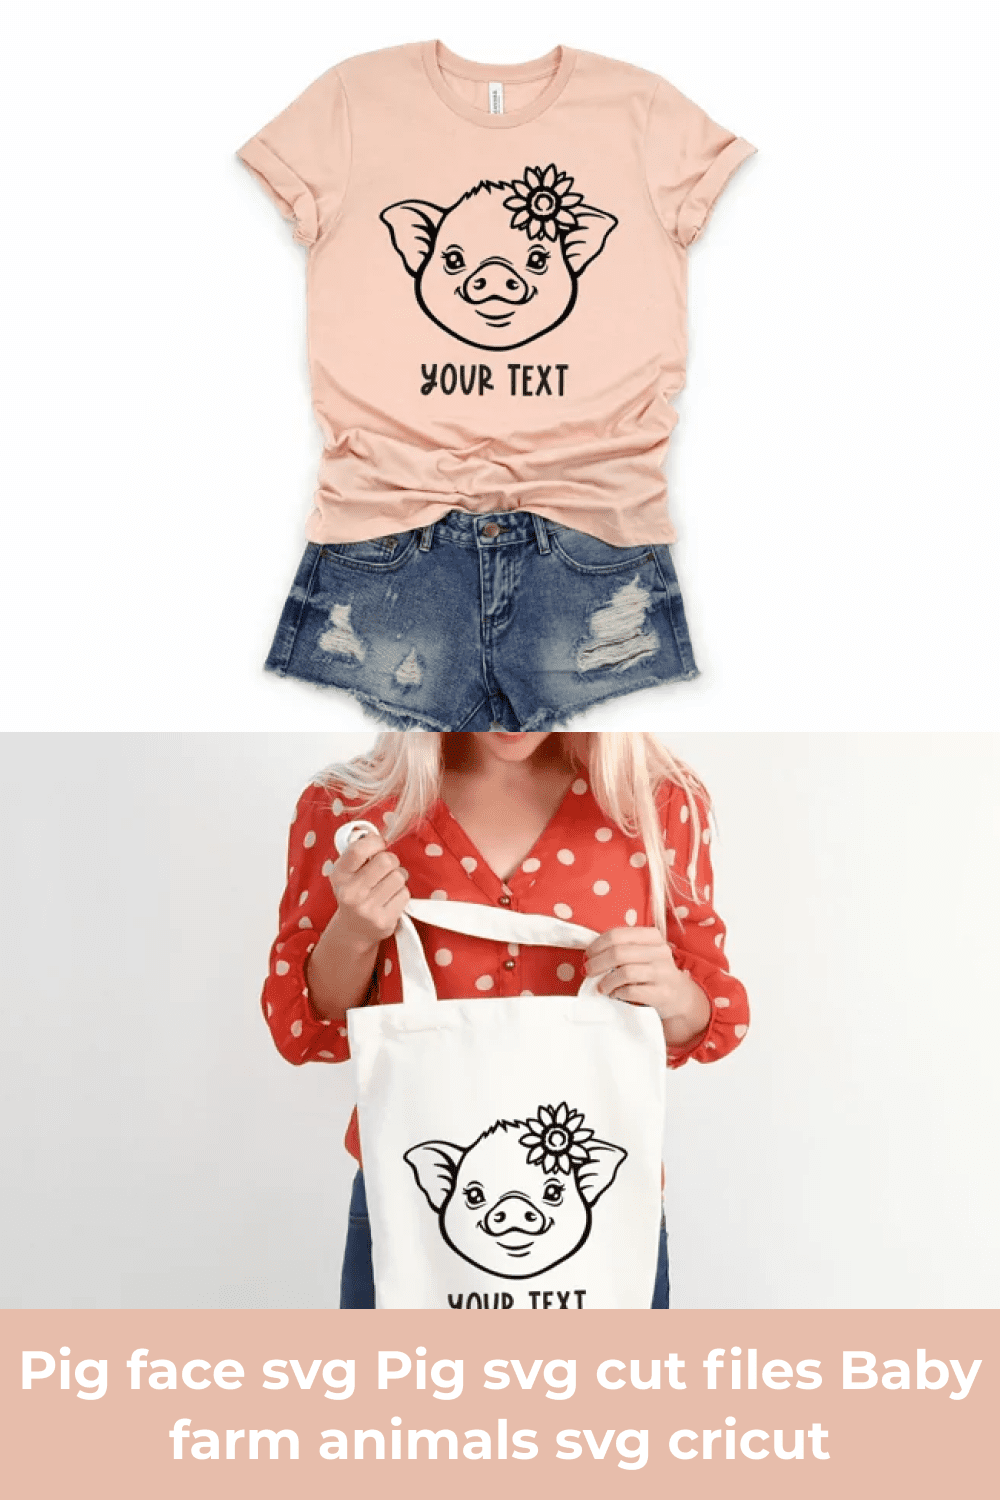 Pig Face SVG Pig SVG Cut Files Baby Farm Animals SVG Cricut.